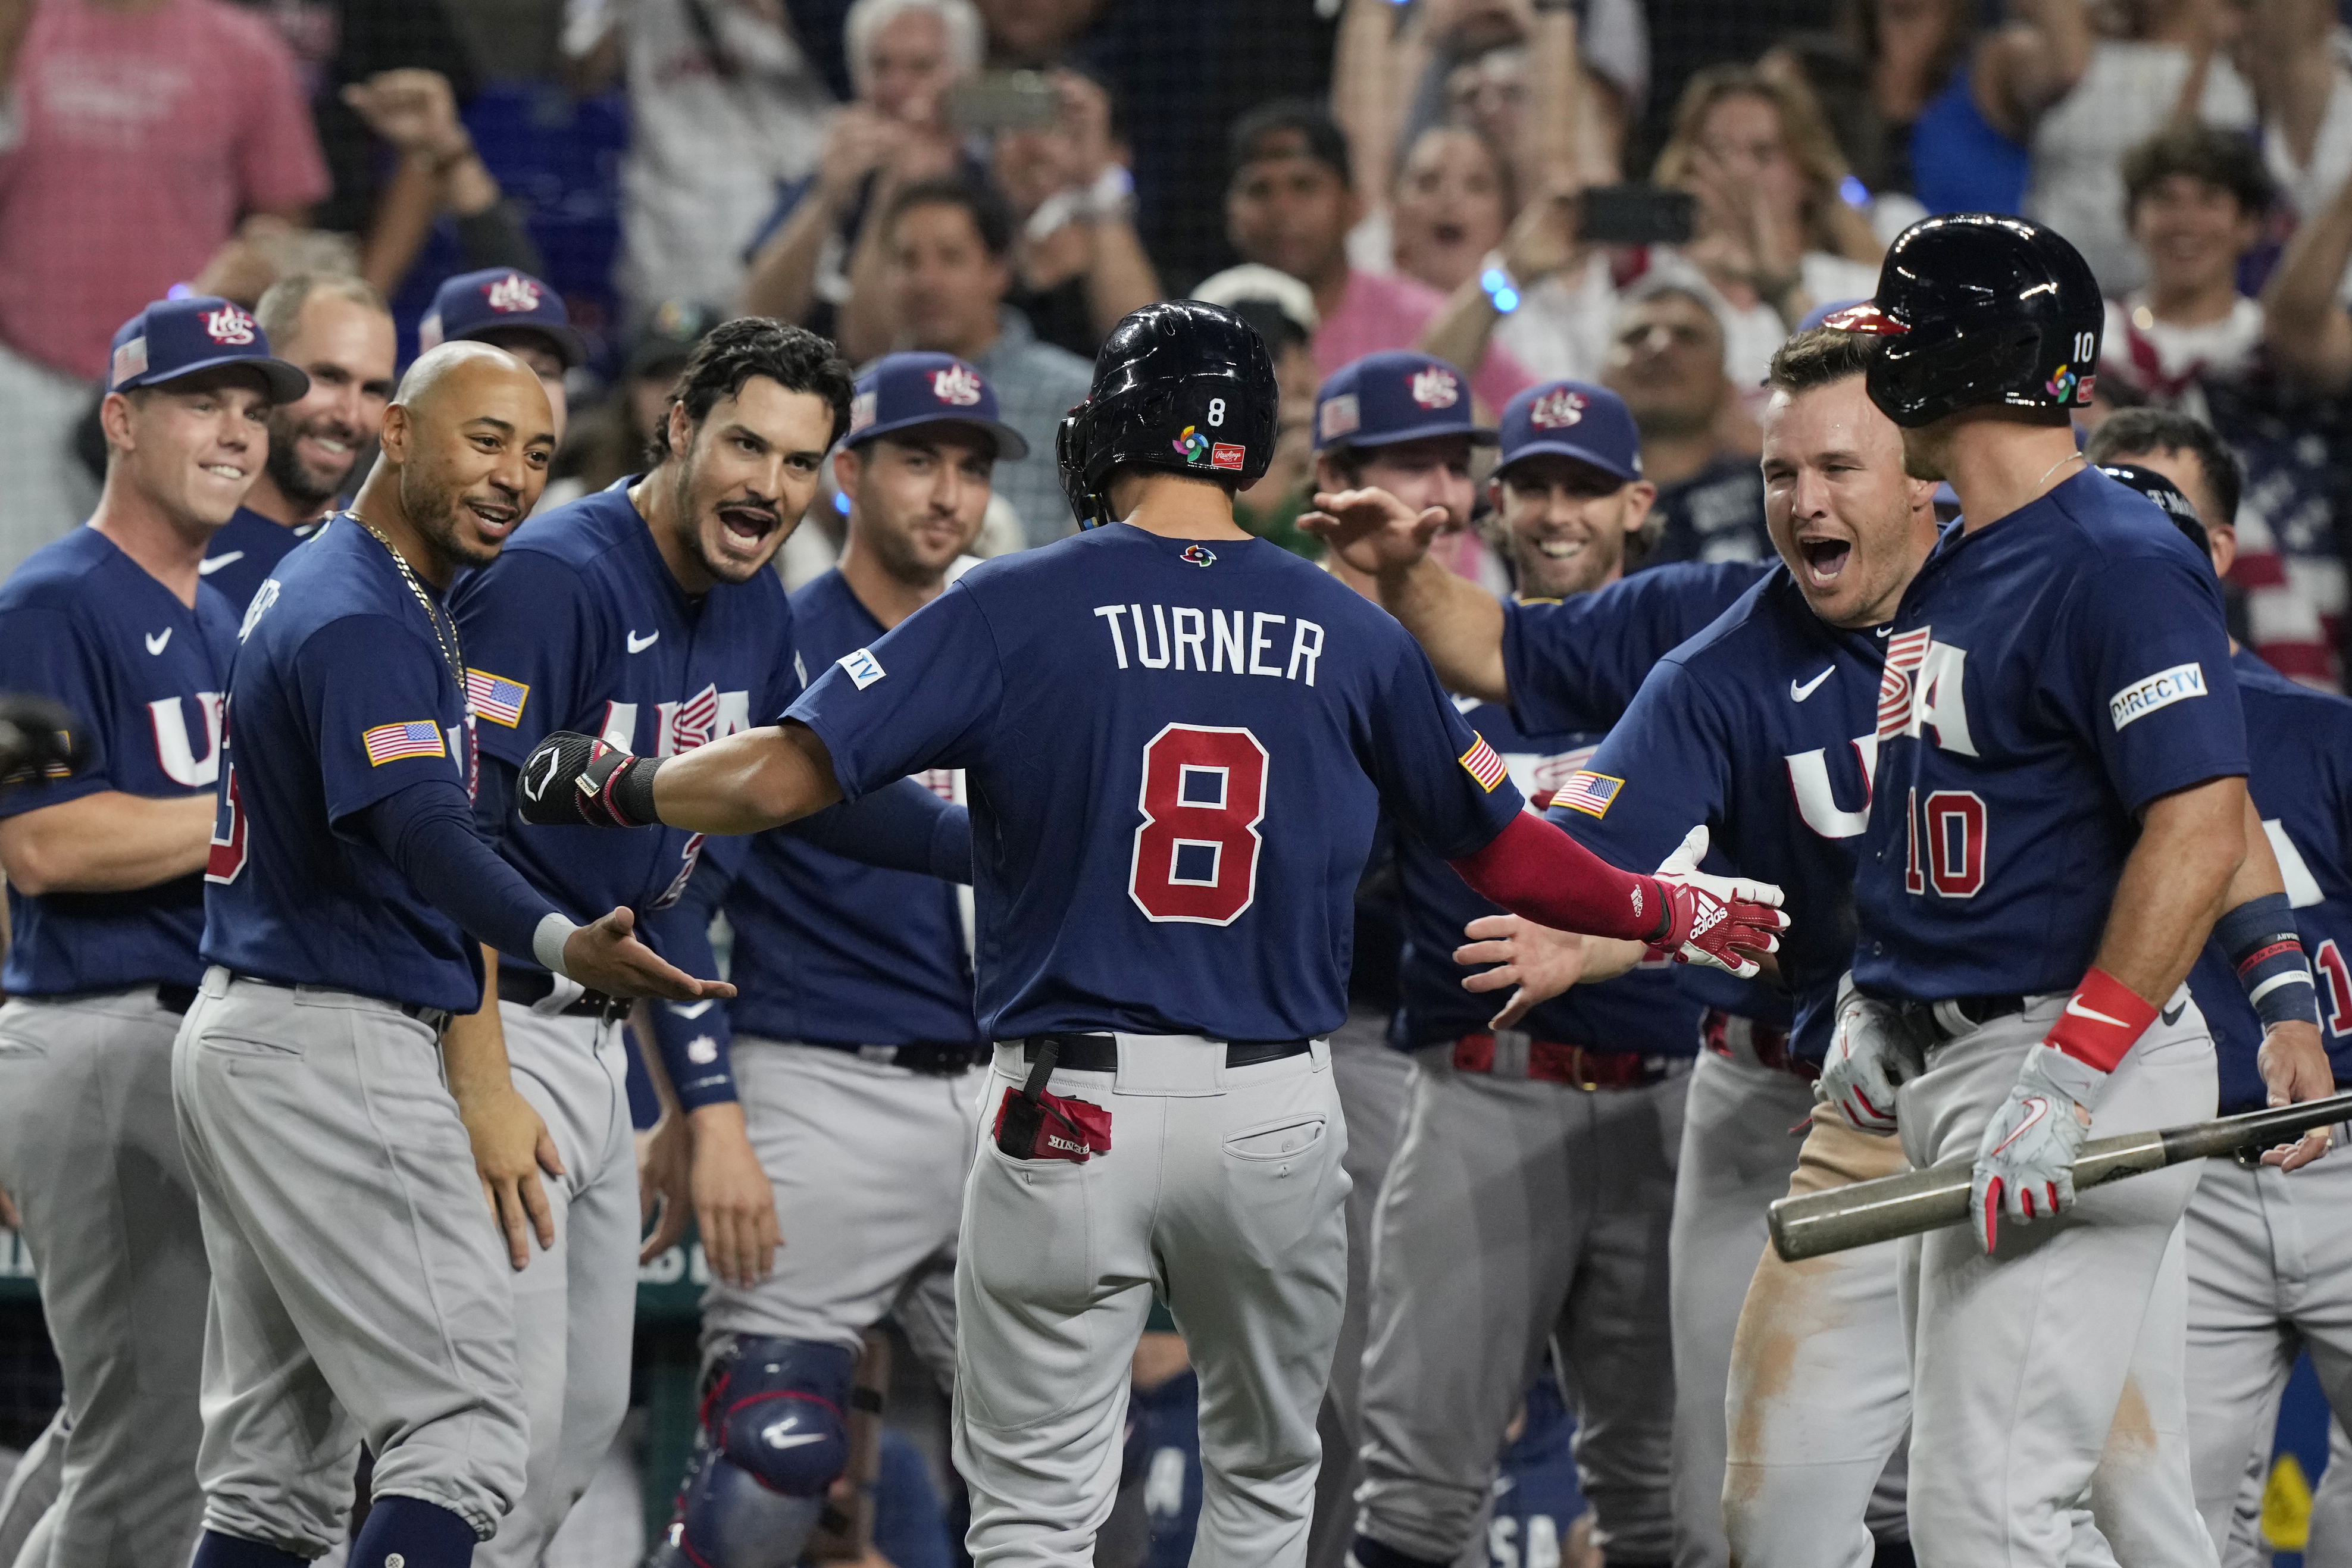 Trea Turner's eighth-inning grand slam rescues Team USA in World